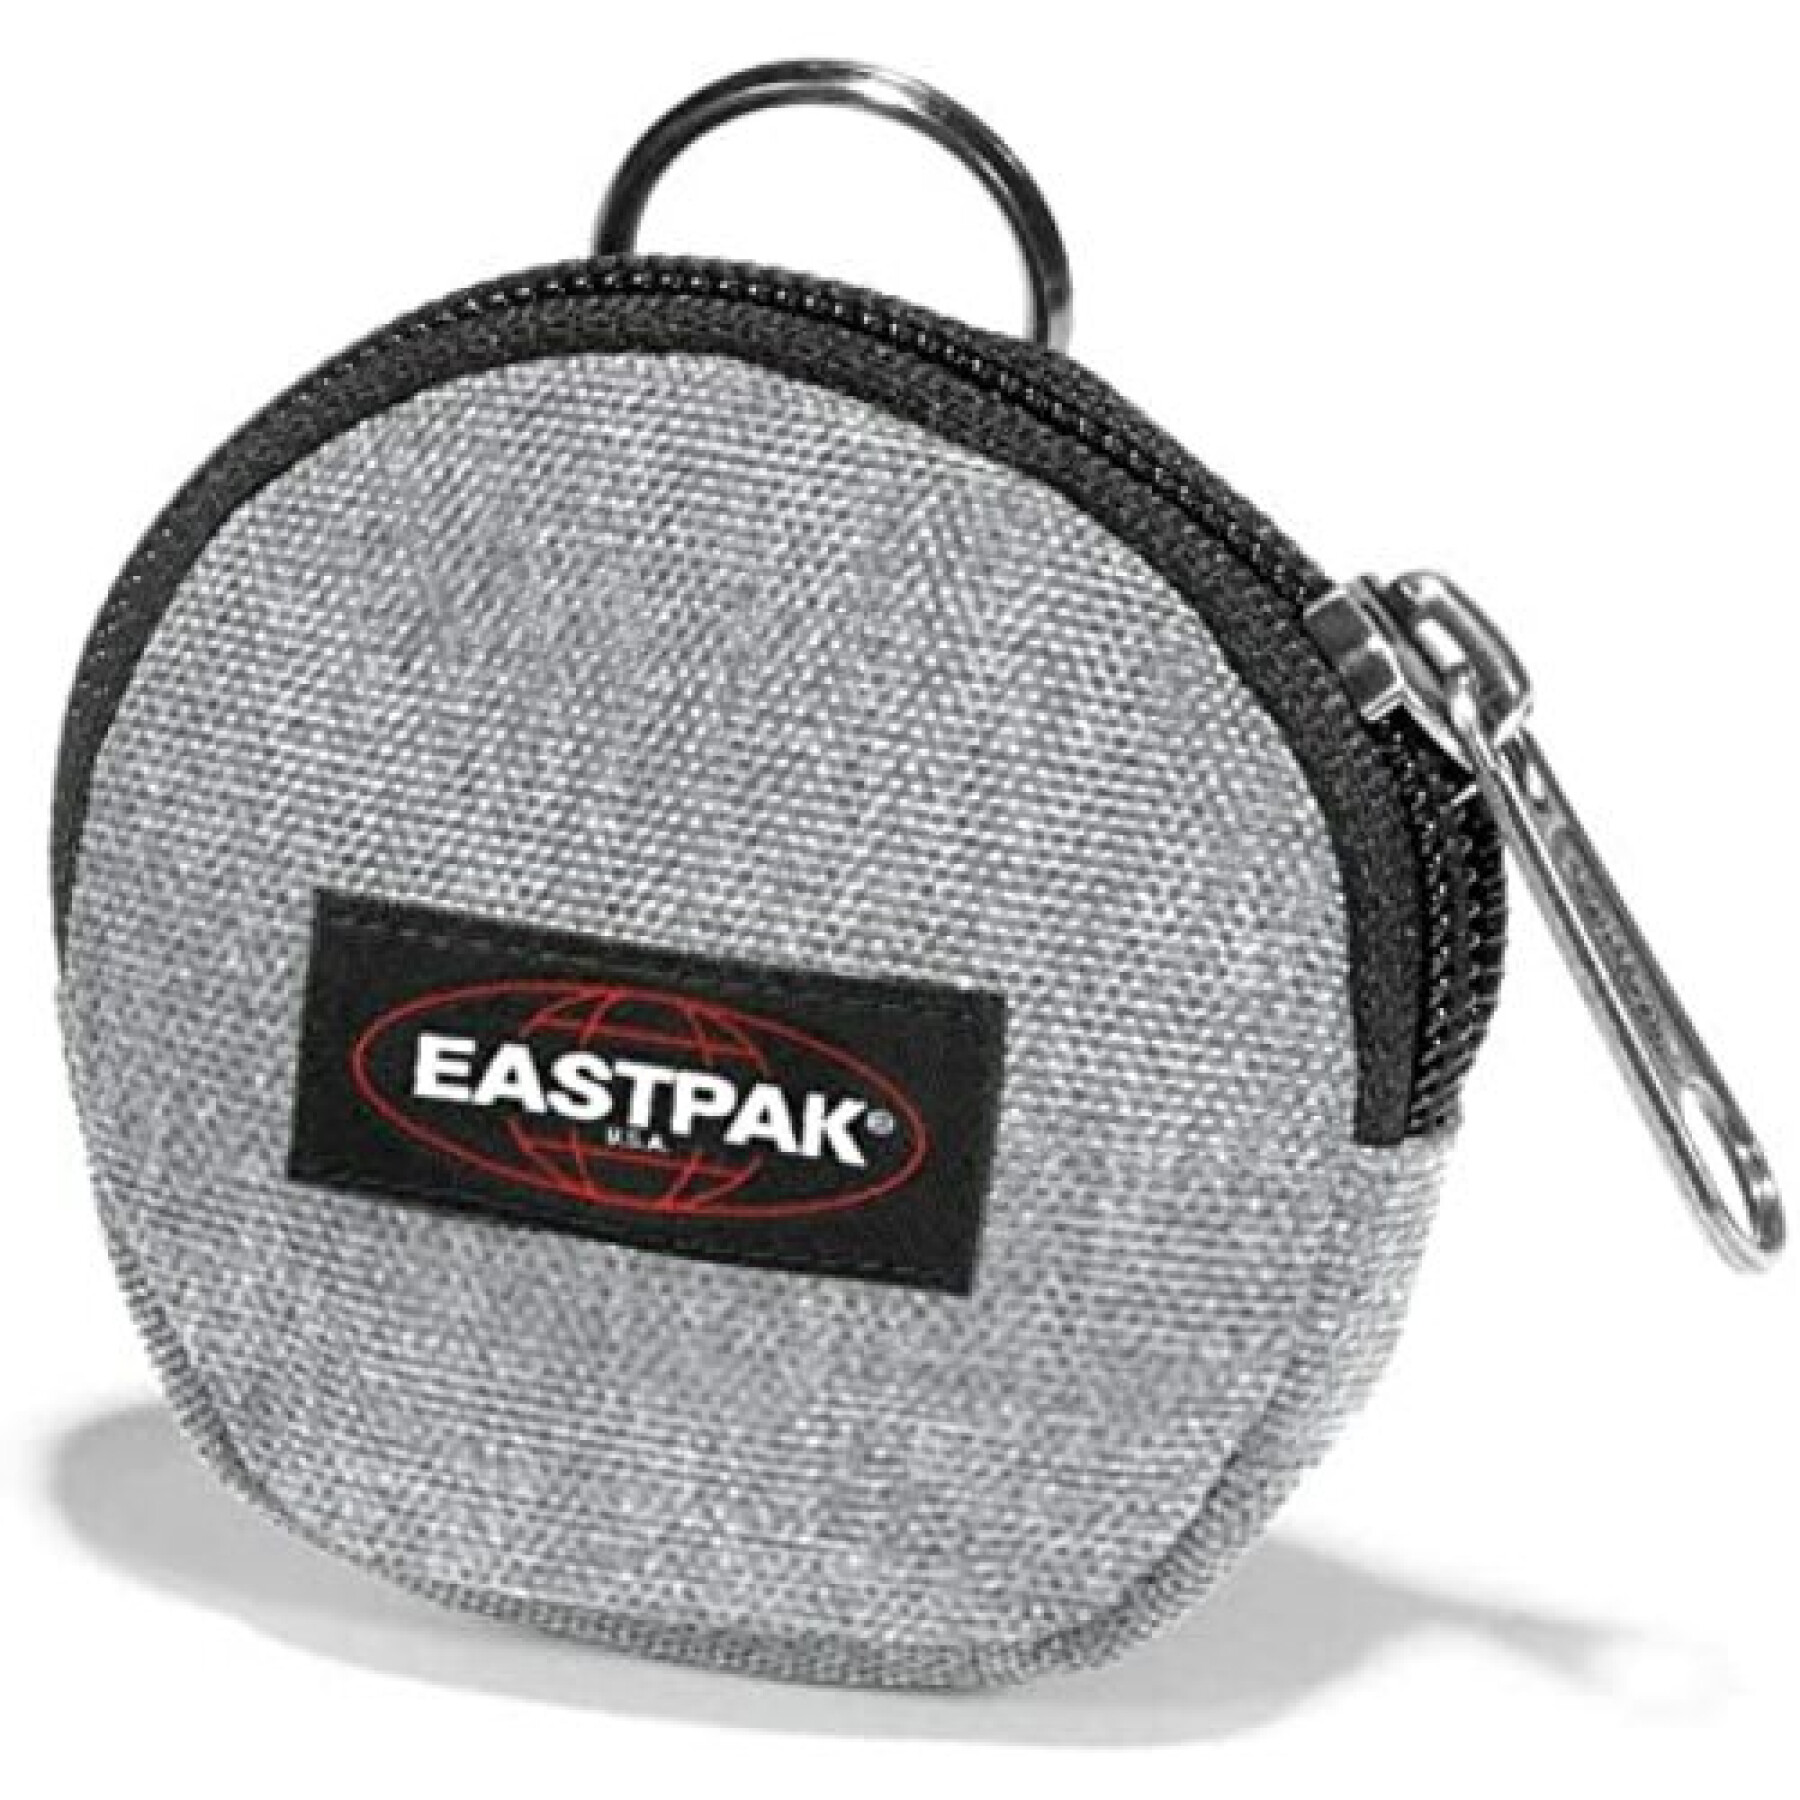 Porta-chaves Eastpak Groupie